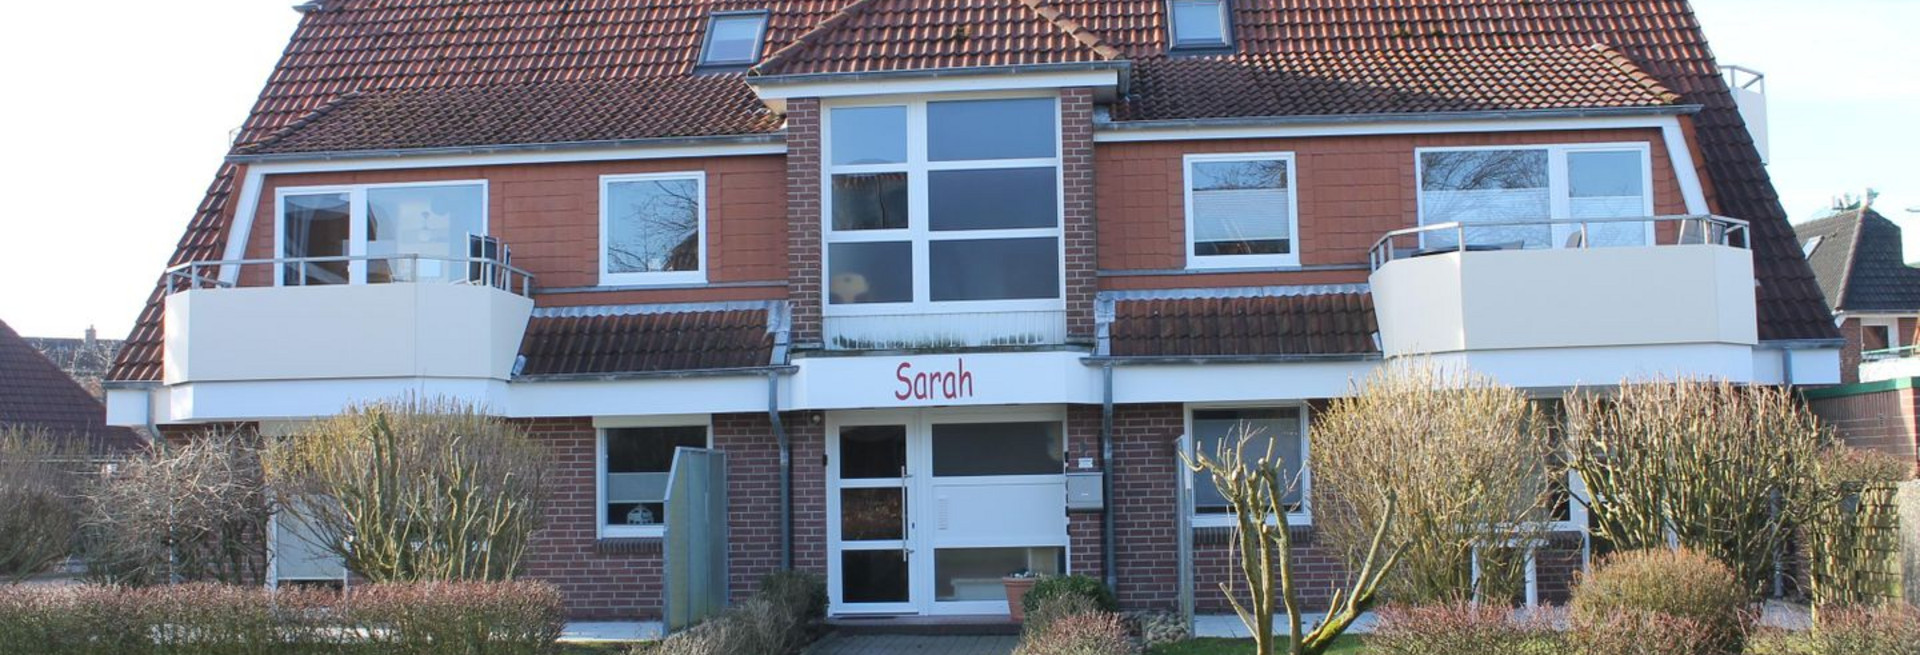 Haus Sarah